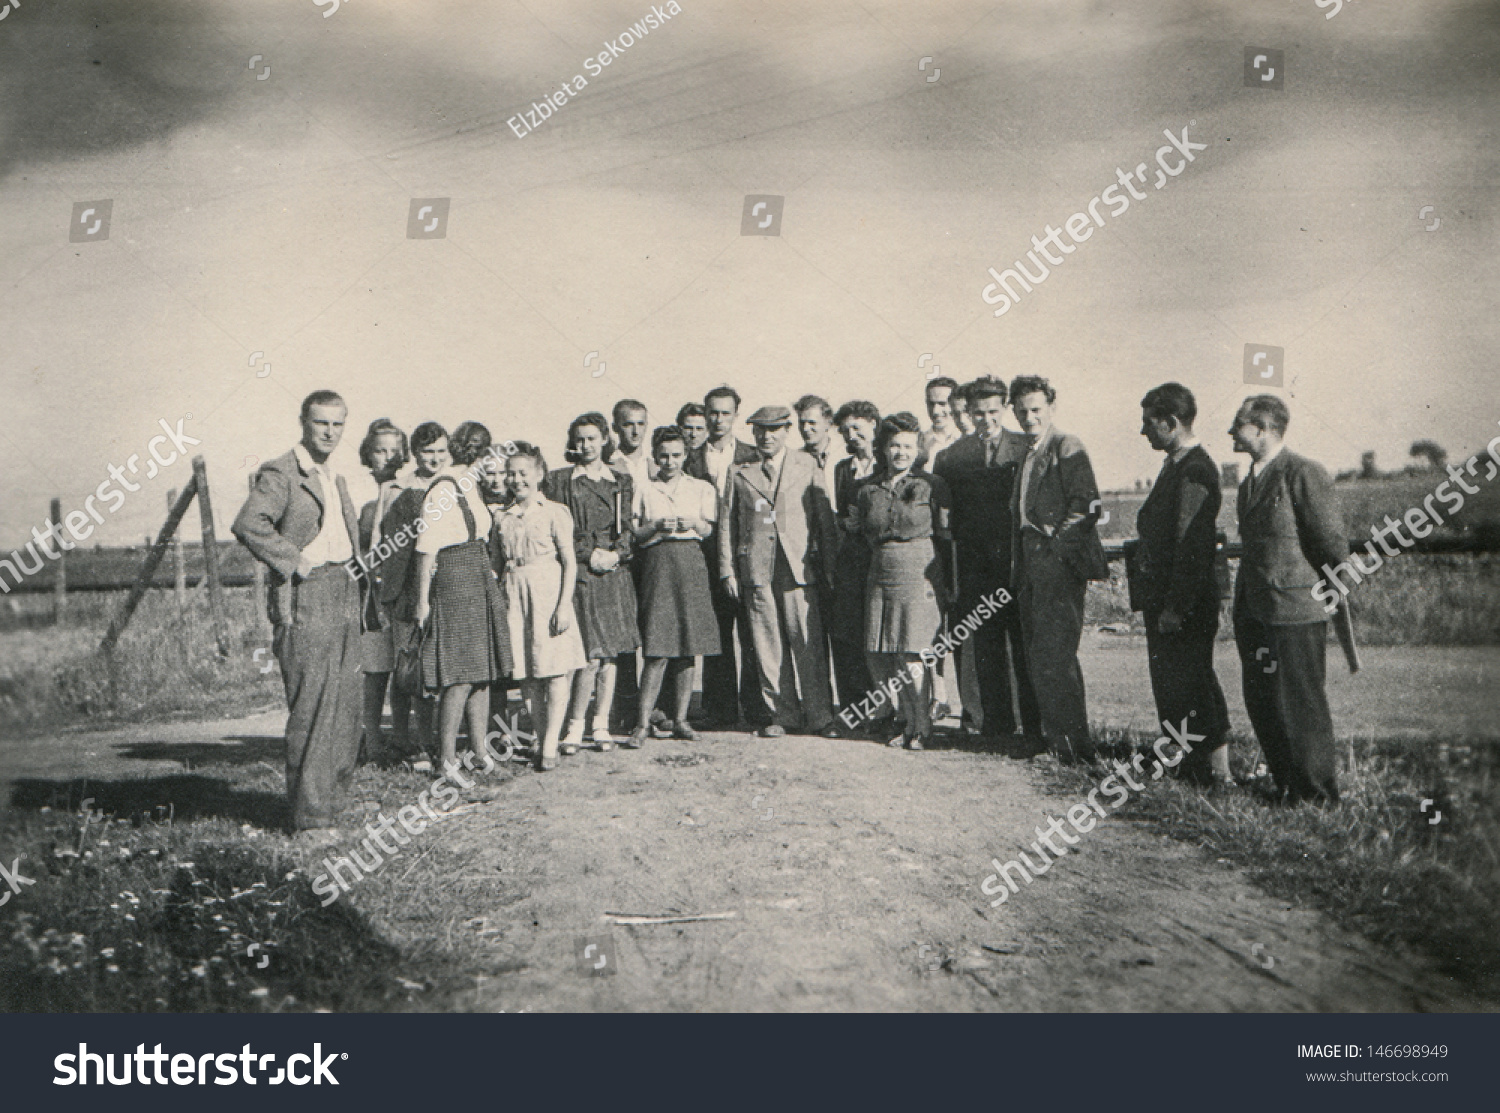 RAWICZ, POLAND, CIRCA THIRTIES - vintage photo of group of people outdoor, Rawicz, Poland, circa thirties #146698949